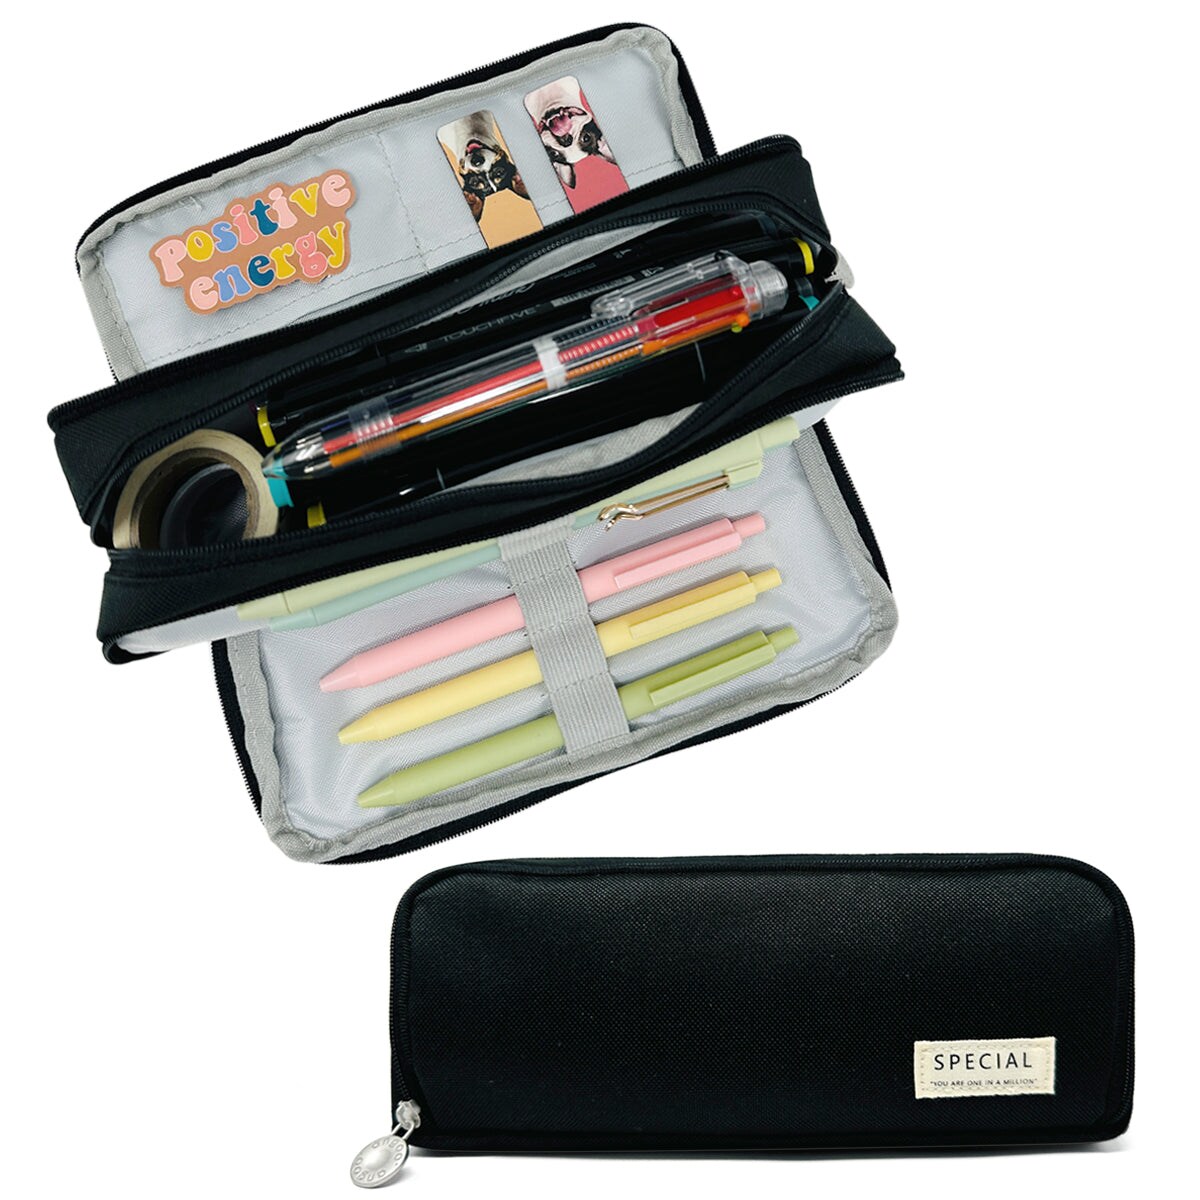  iSuperb Multi Compartments Pencil Case 3 Zippers